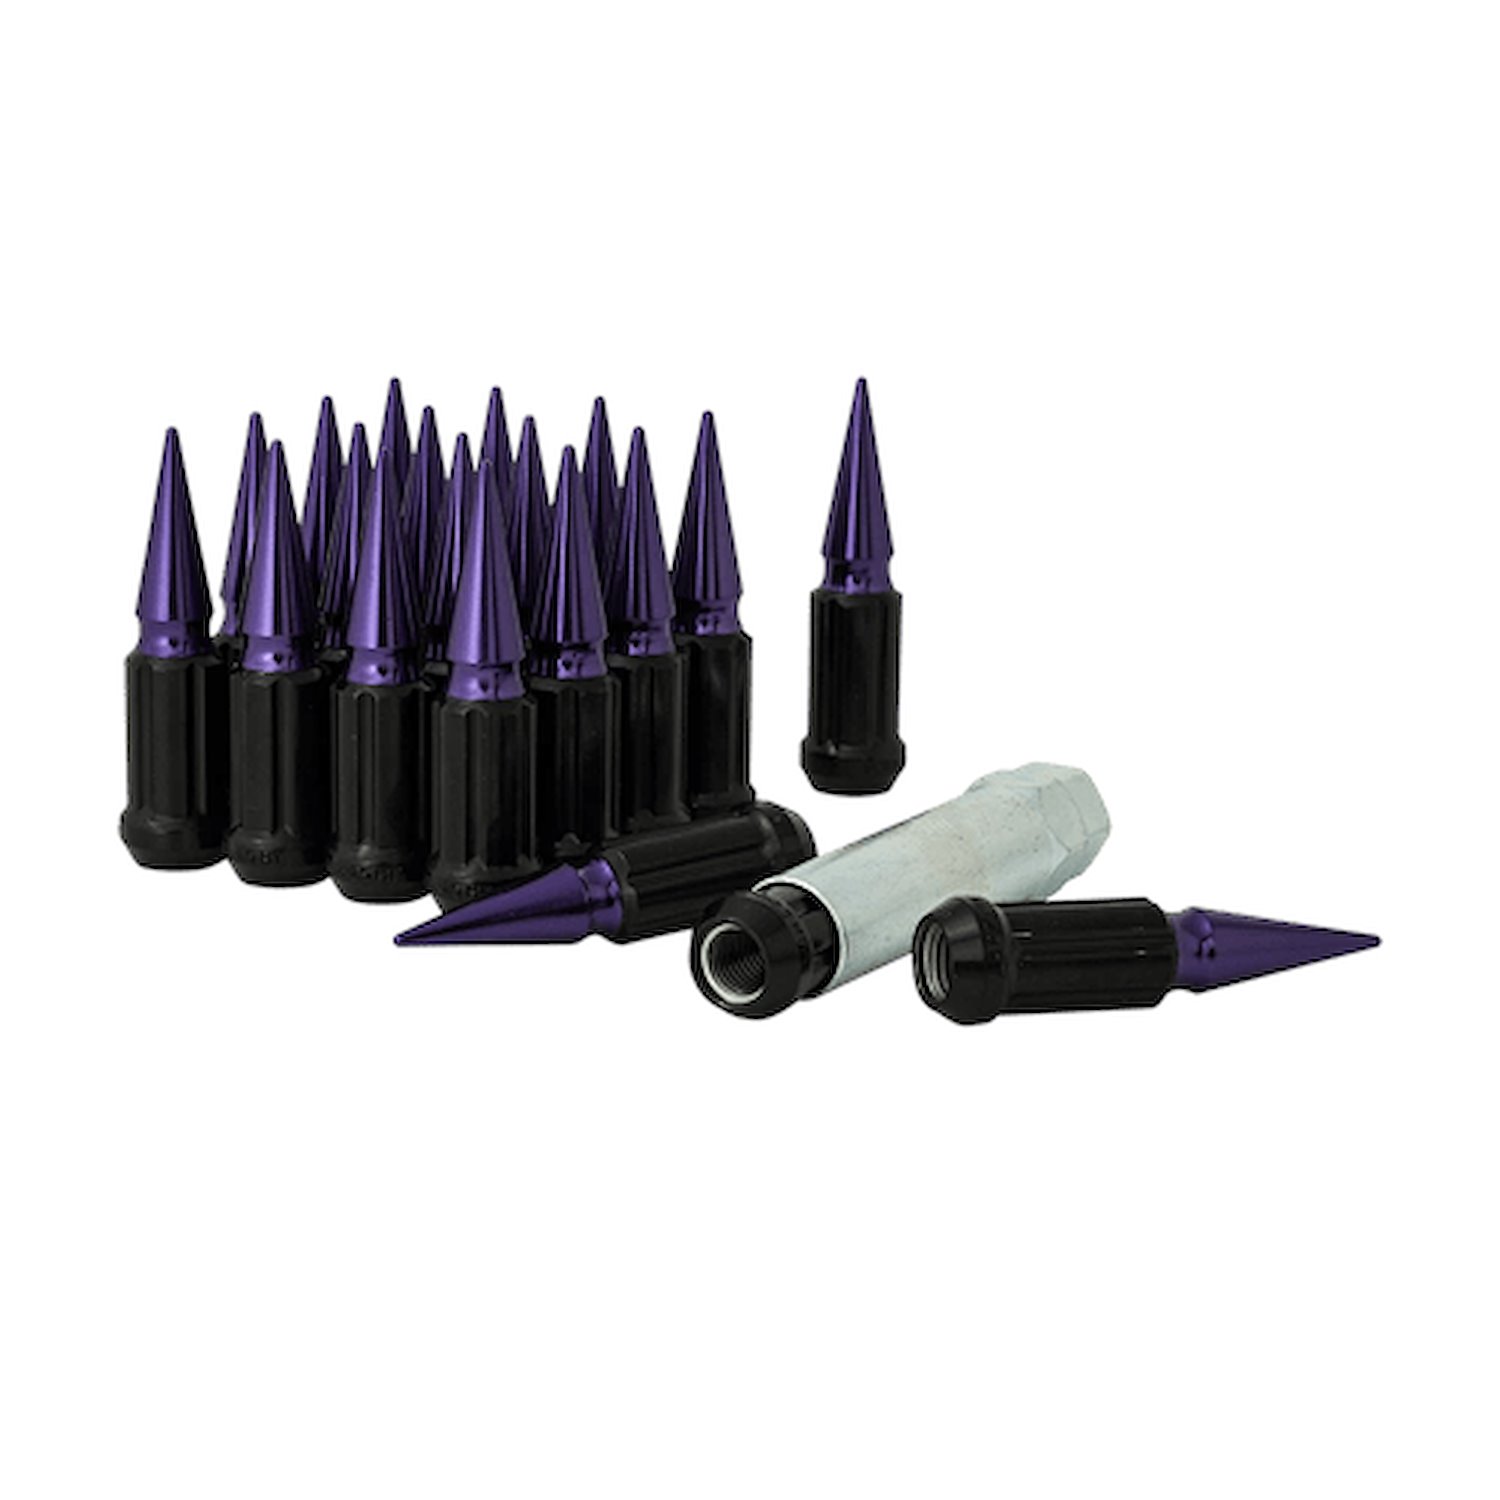 SSPK5-12150PR 5-Lug 12 mm x 1.50 Short Spike Kit, Purple